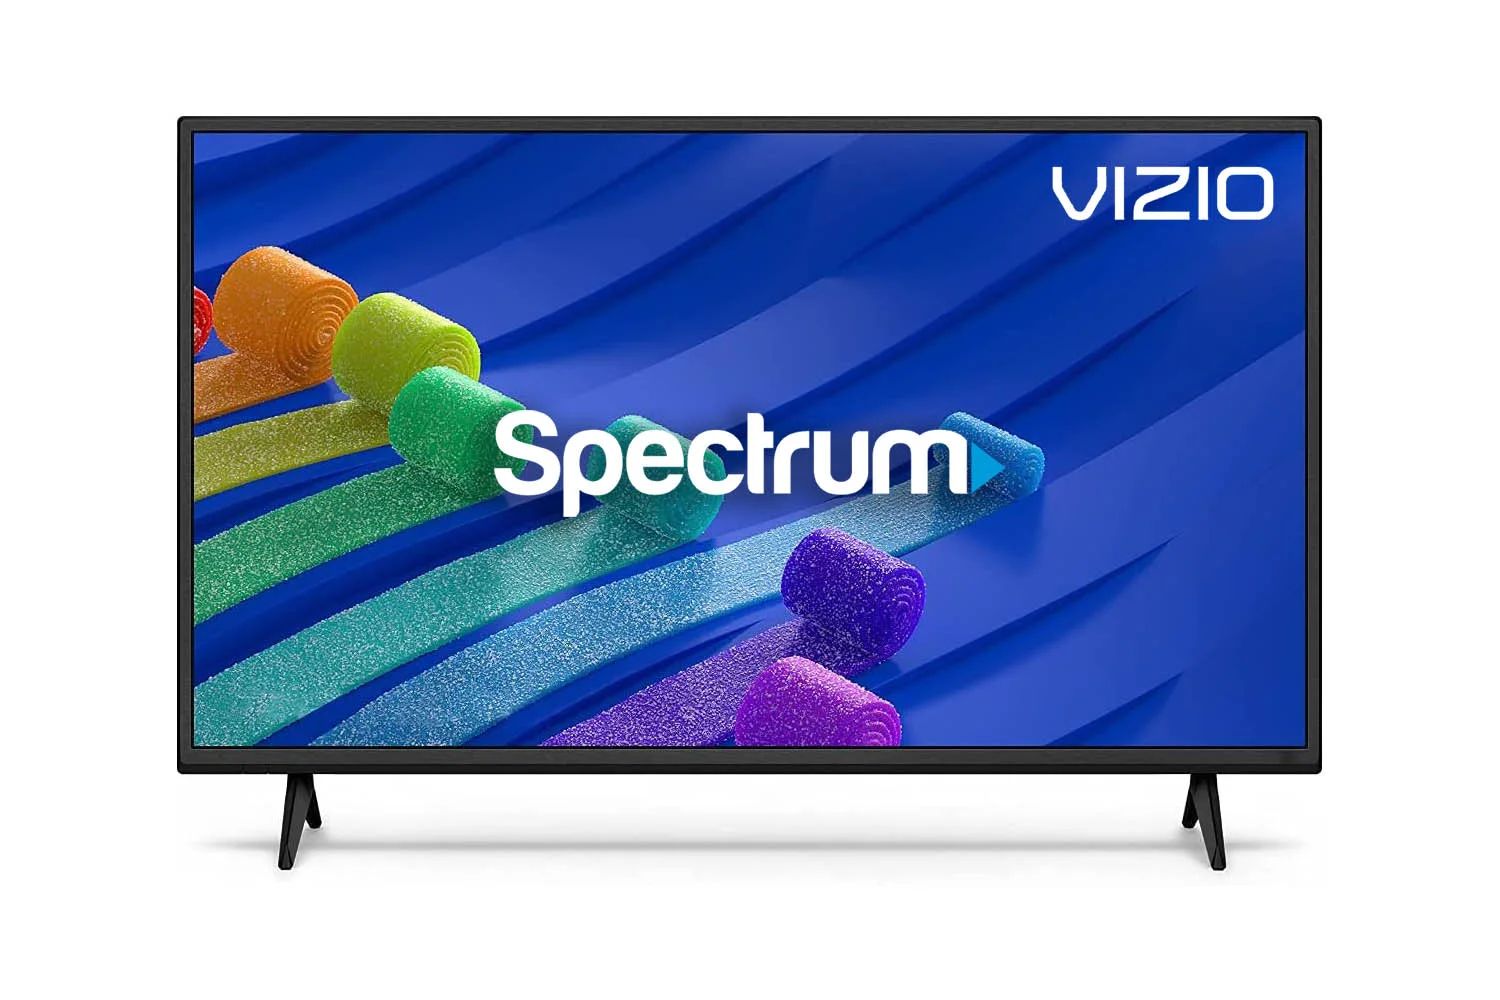 How To Install Spectrum On Vizio Smart TV